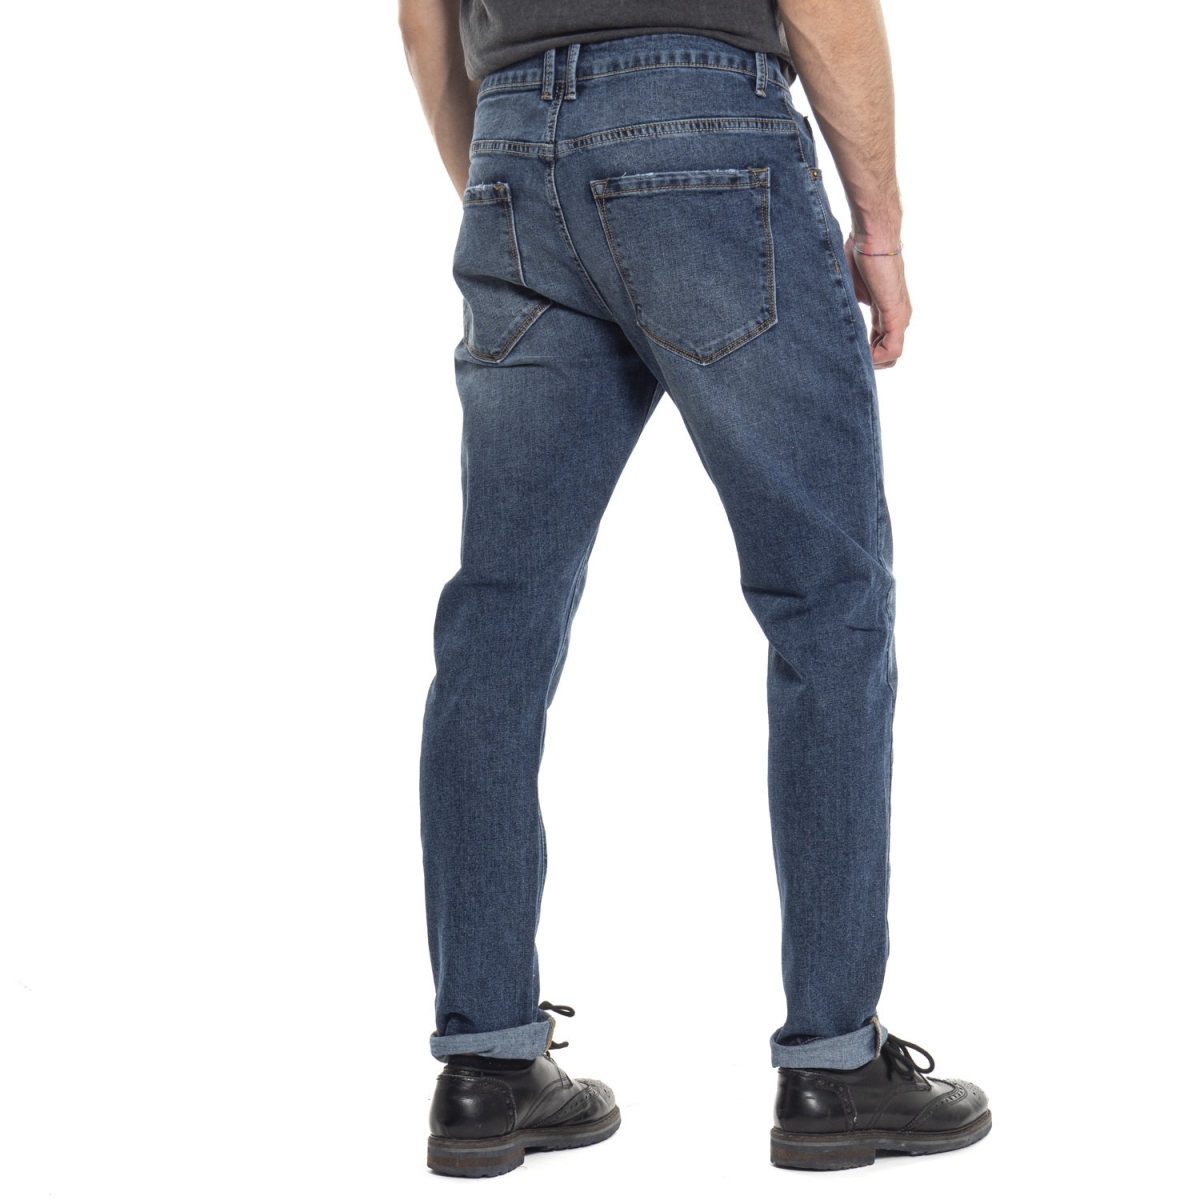 clothing Denim men Jeans ATM1088-2 LANDEK PARK Cafedelmar Shop